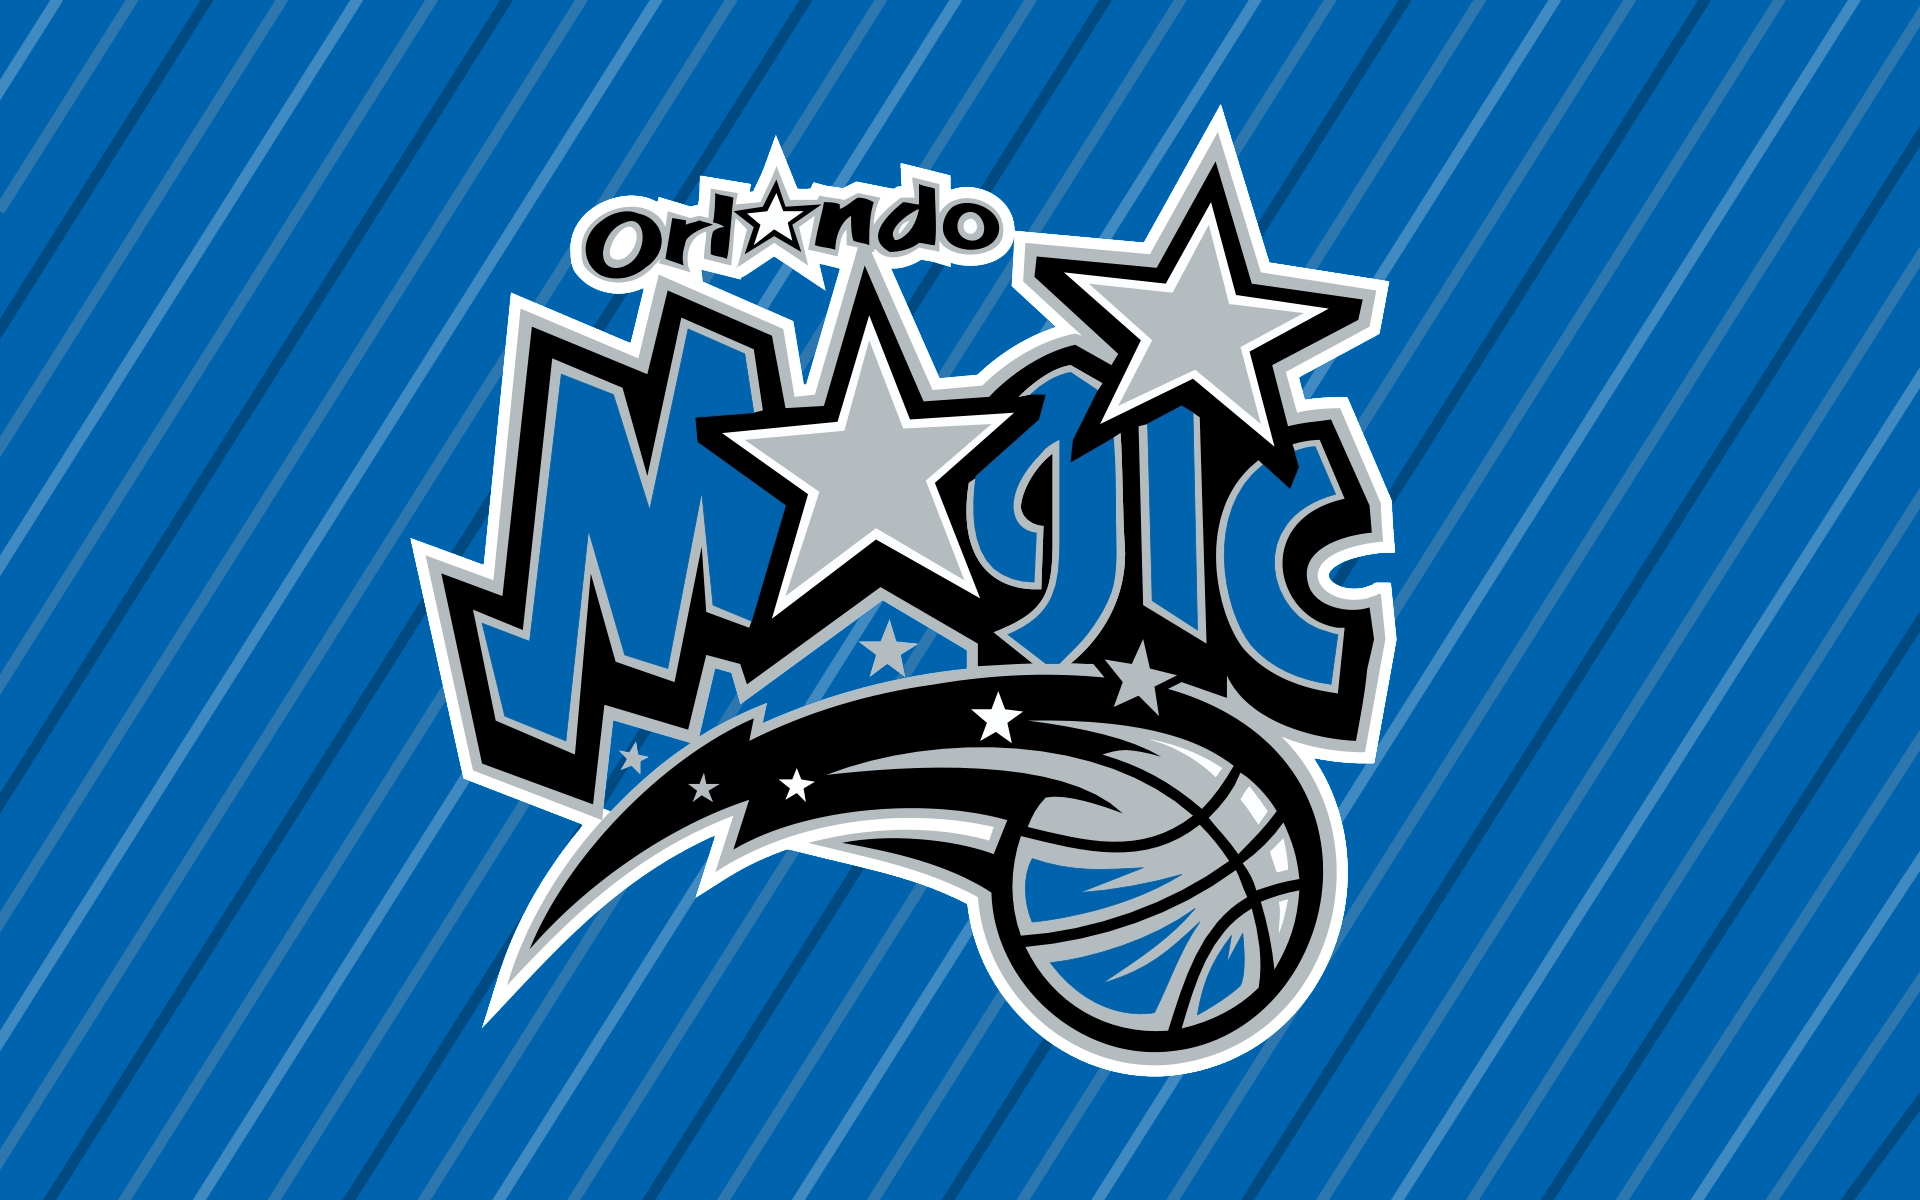 Orlando Magic win NBA draft lottery